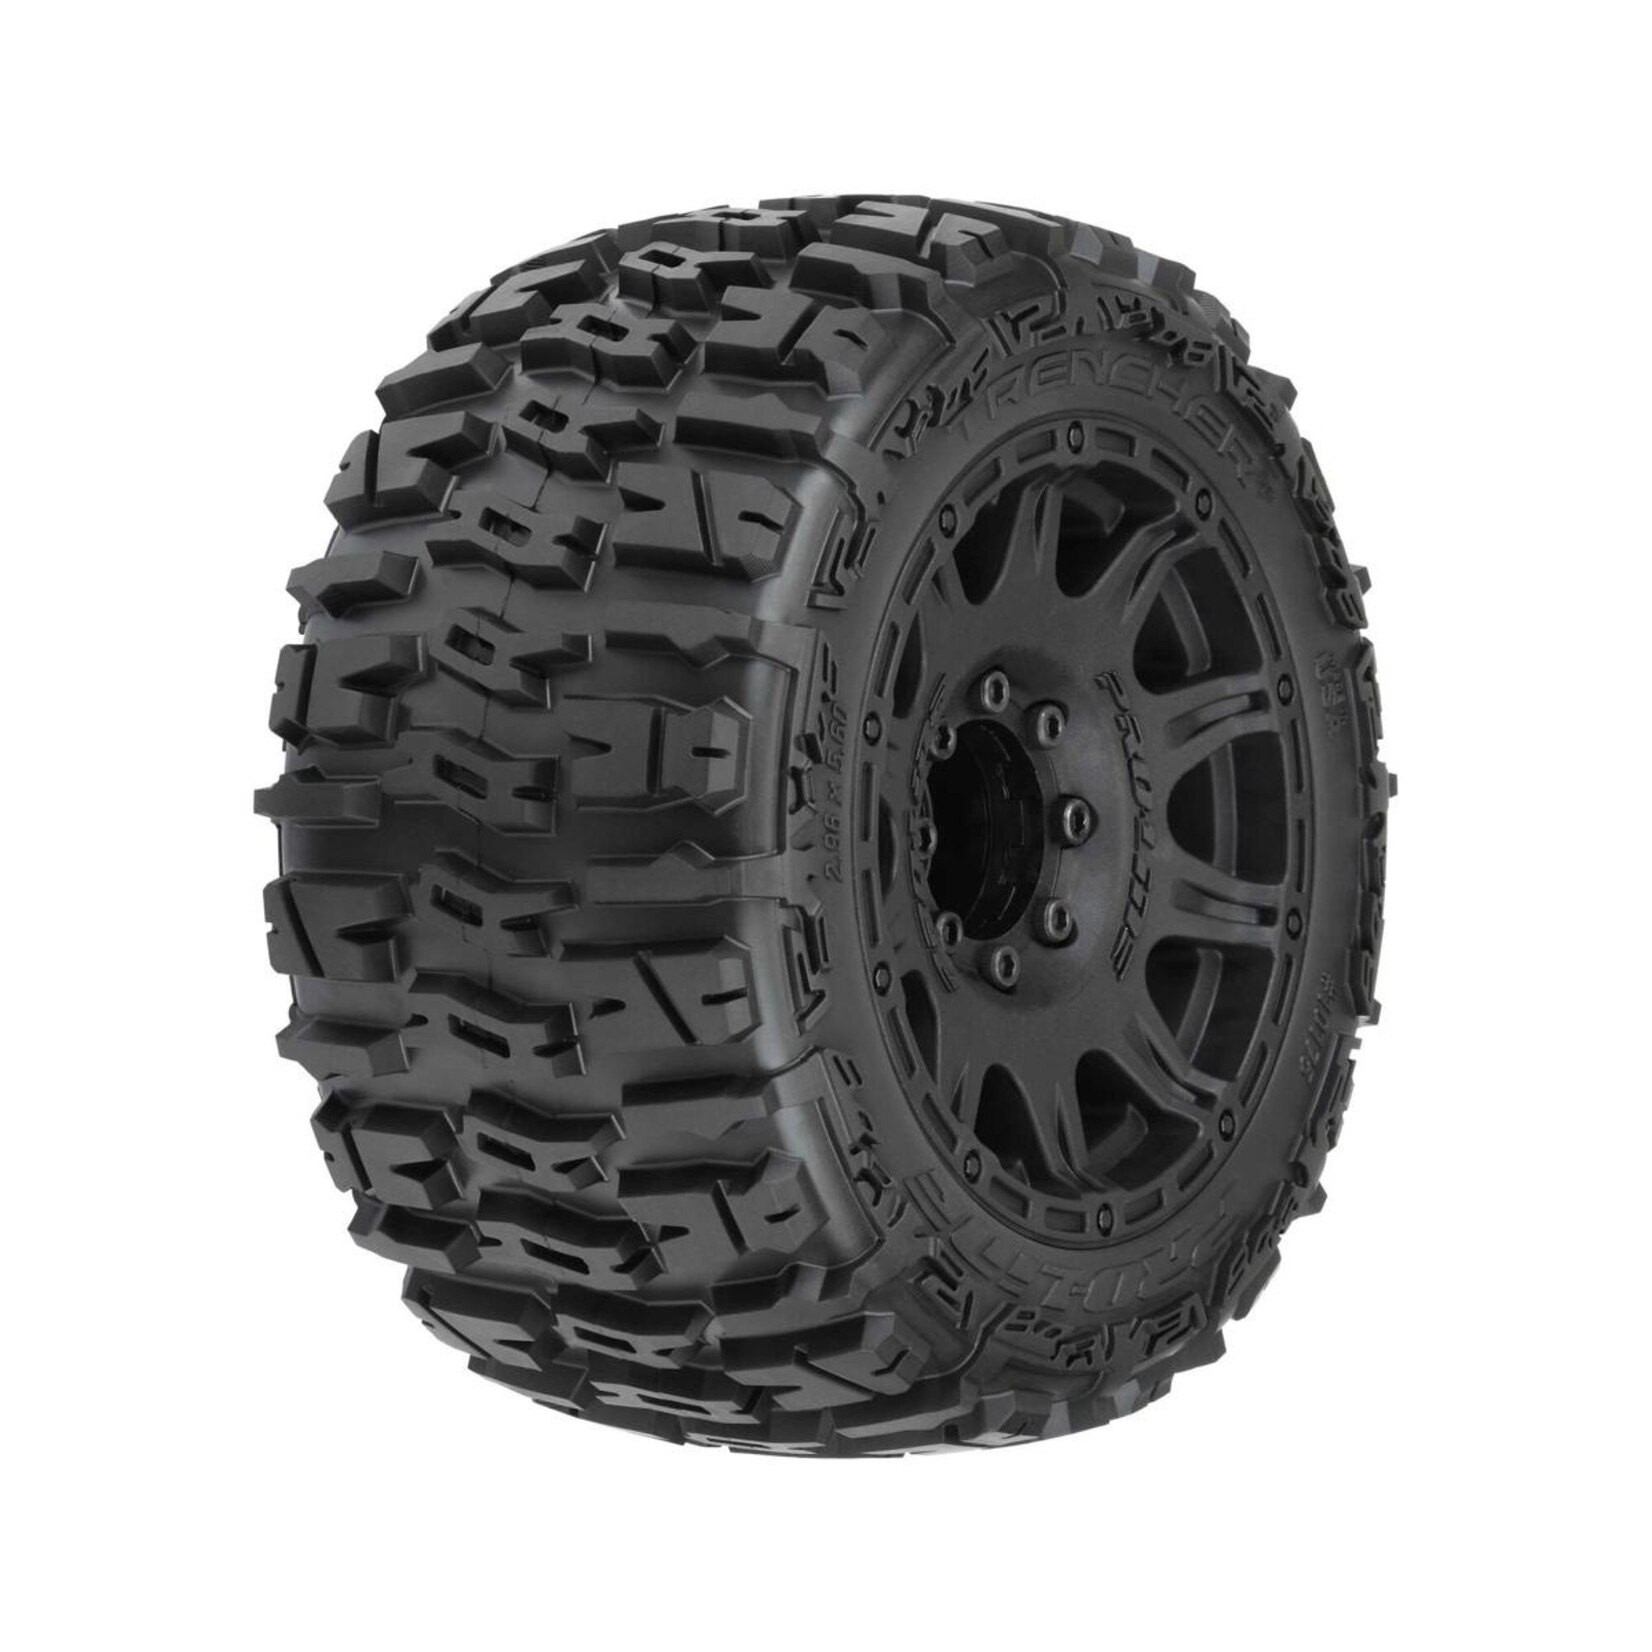 Pro-Line Pro-Line Trencher LP 3.8" Pre-Mounted Truck Tires (2) (Black) (M2) w/Raid 8x32 Removable Hex Wheels #10175-10